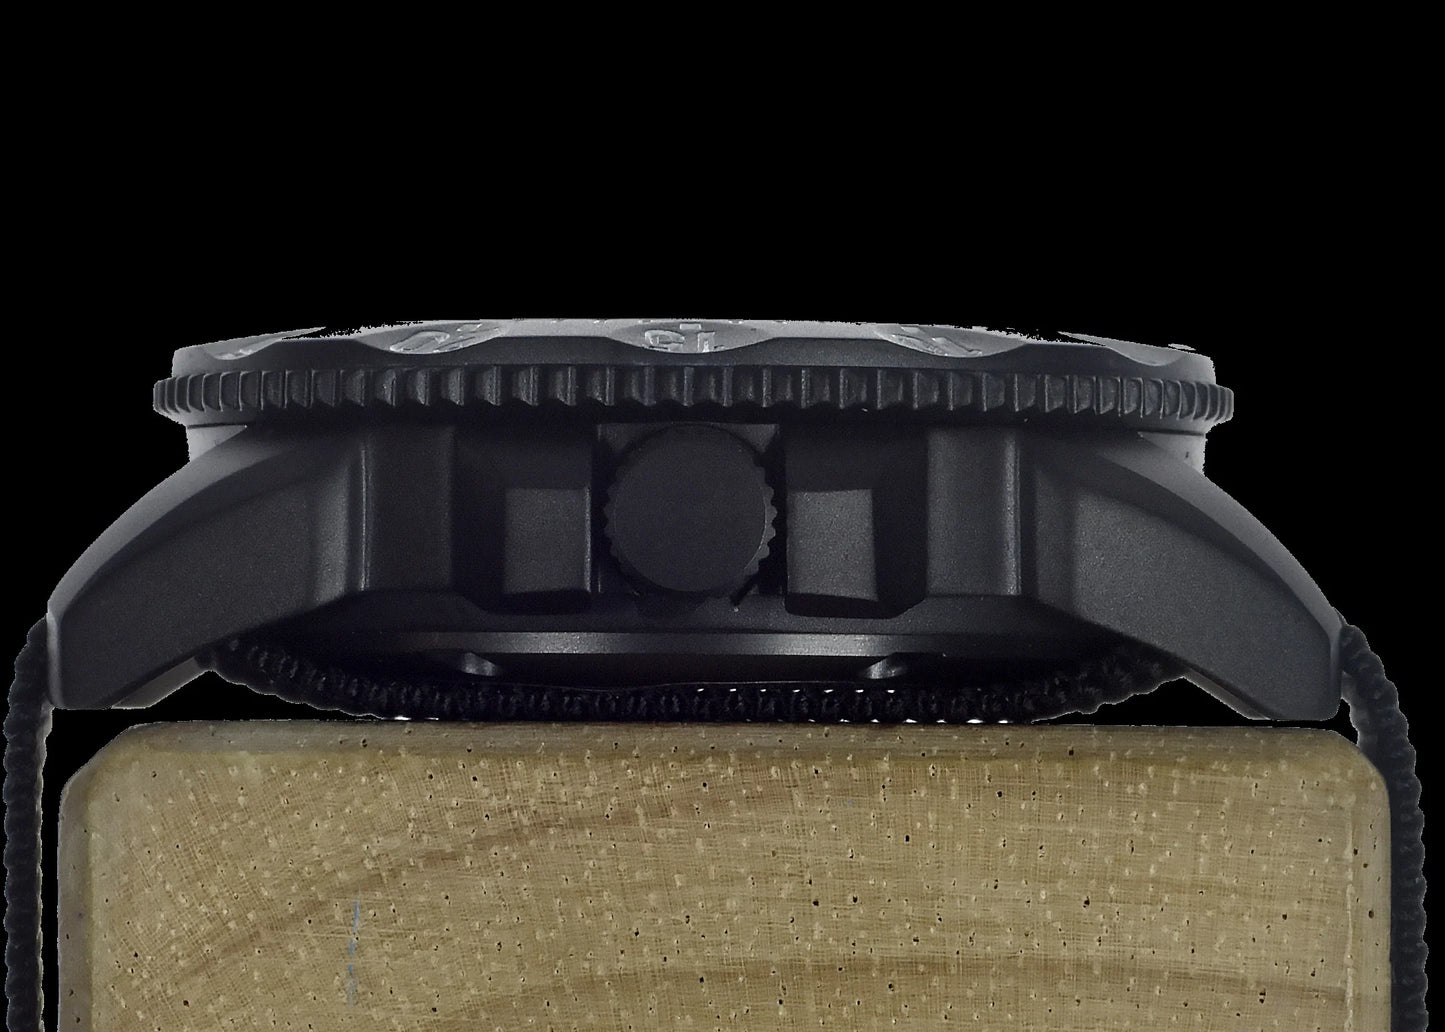 MWC P656 Titanium GTLS Tritium Tactical Watch, 10 Year Battery